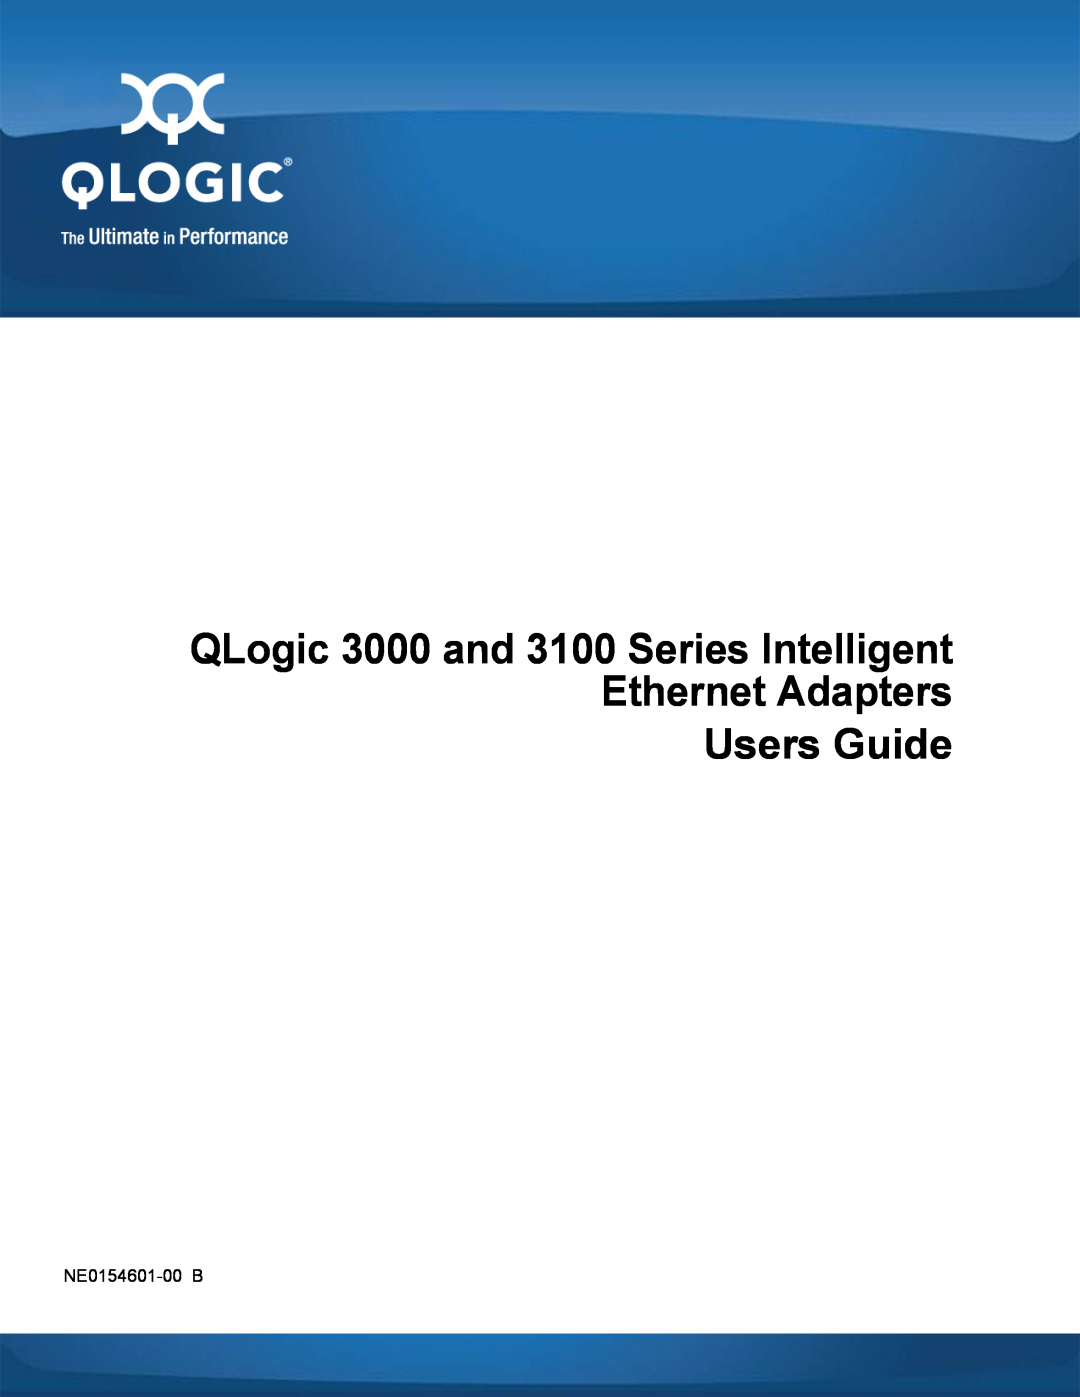 Q-Logic manual QLogic 3000 and 3100 Series Intelligent Ethernet Adapters Users Guide, NE0154601-00 B 